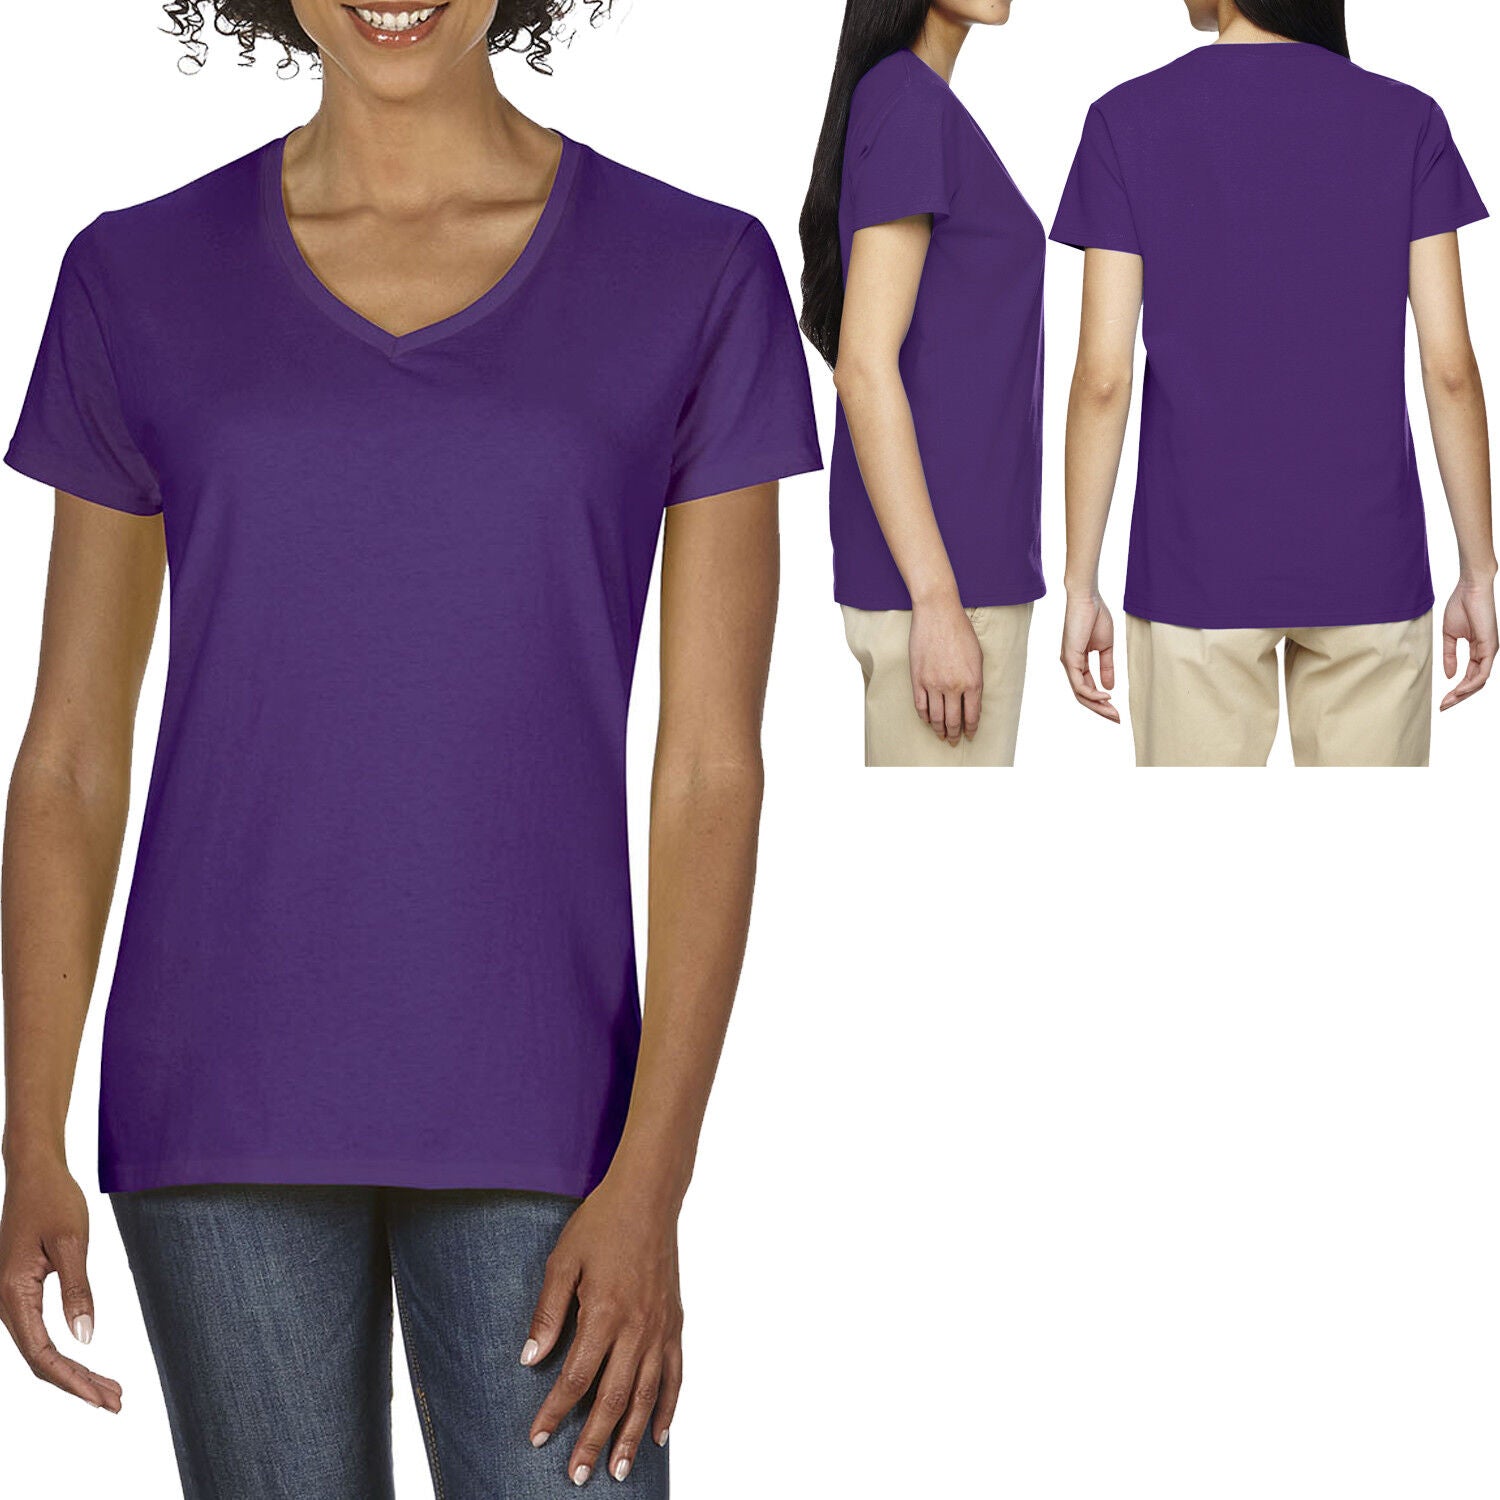 Plus Size Ladies V-Neck T-Shirt 100% Cotton Womens Tee Top Missy Fit XL 2XL 3XL